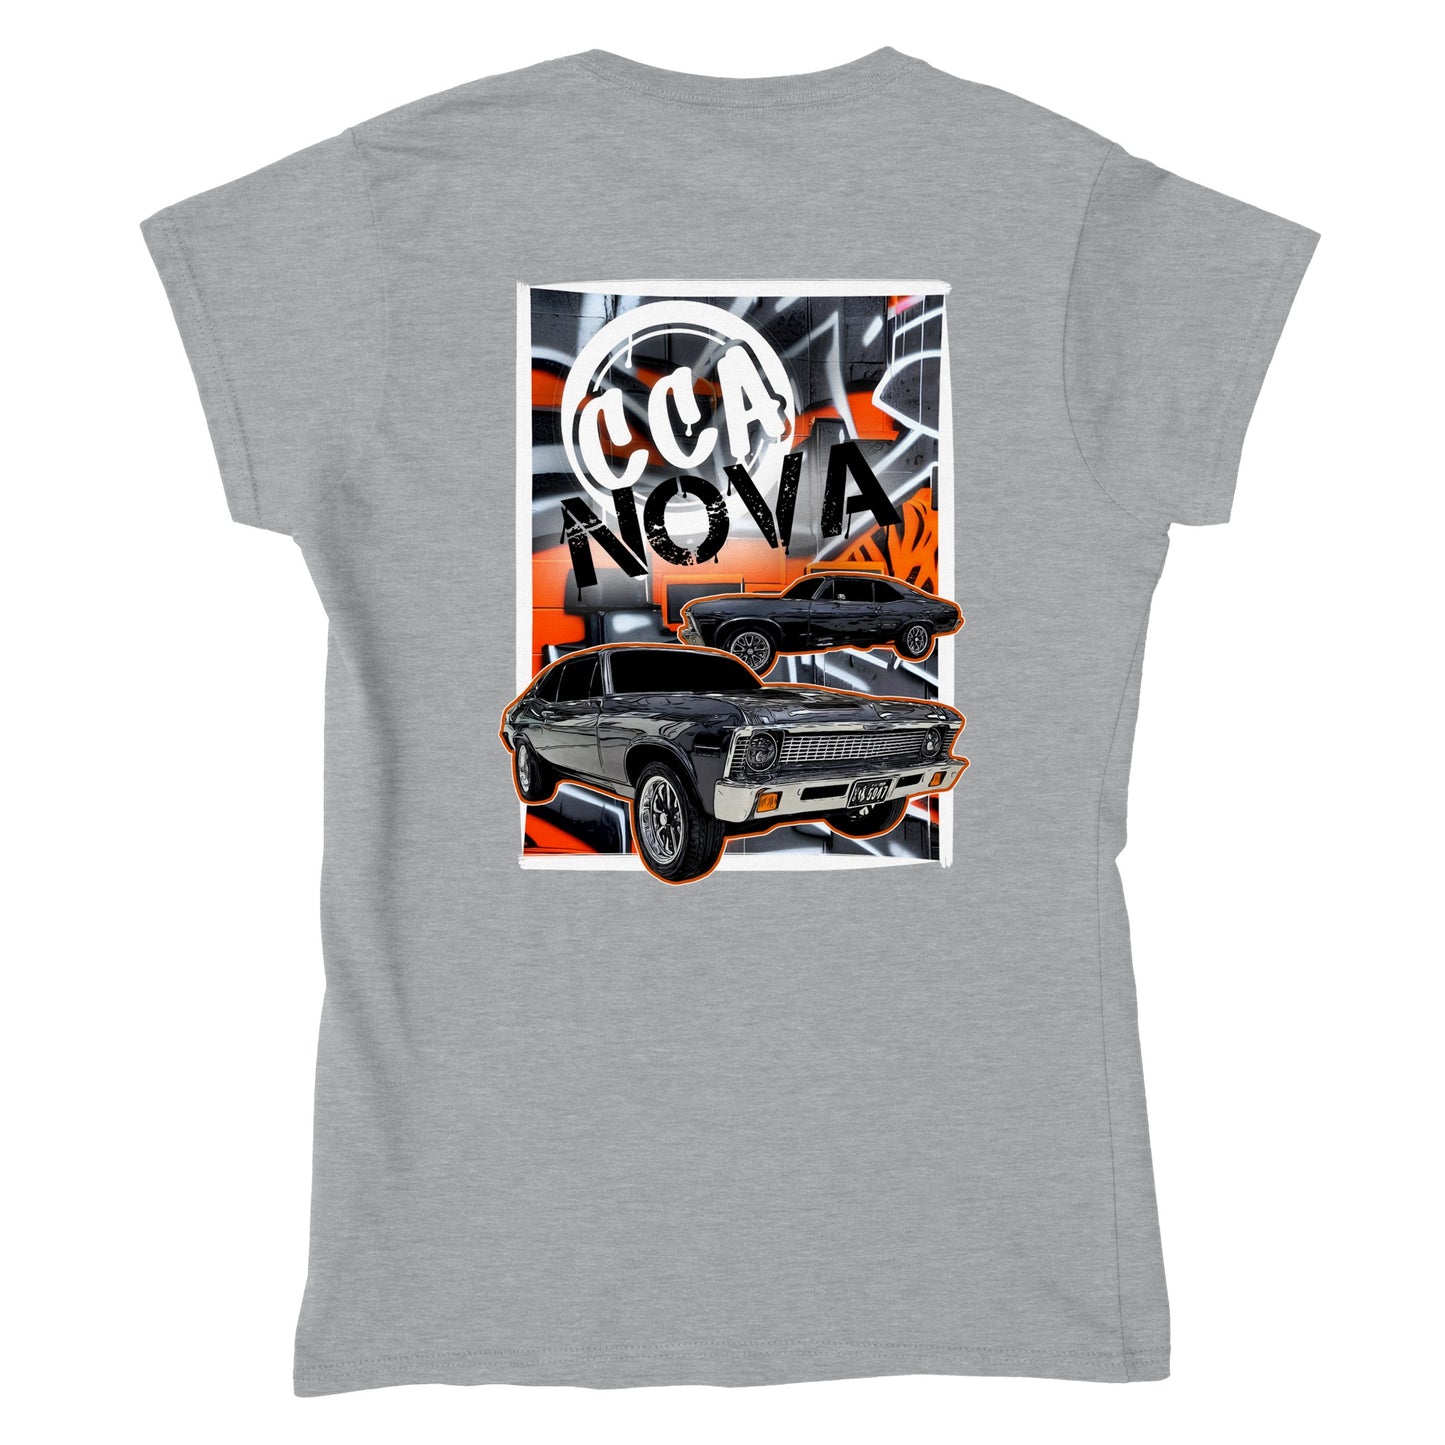 Womens Nova T-shirt